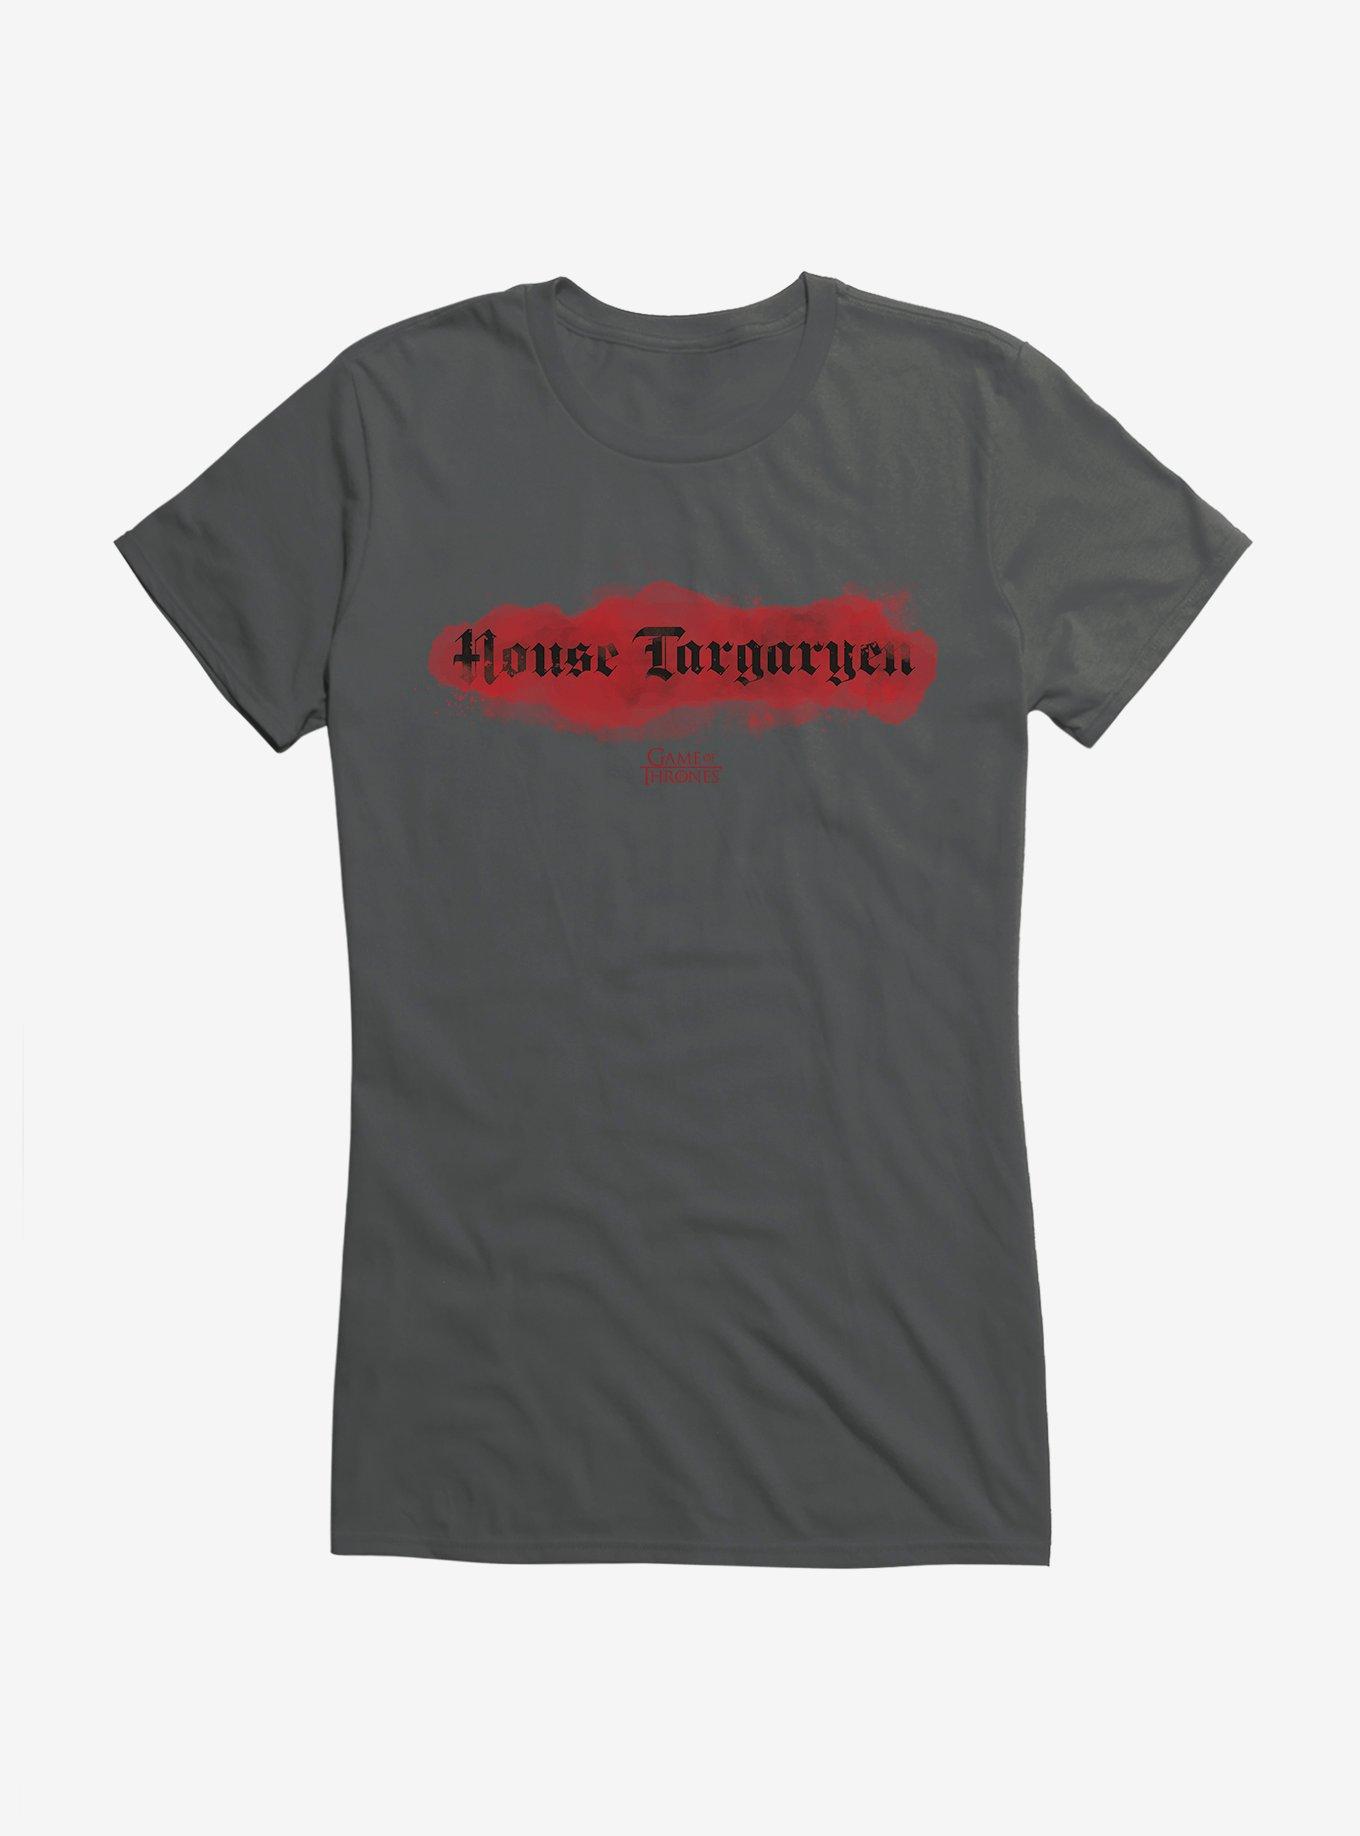 Game Of Thrones House Targaryen Girls T-Shirt